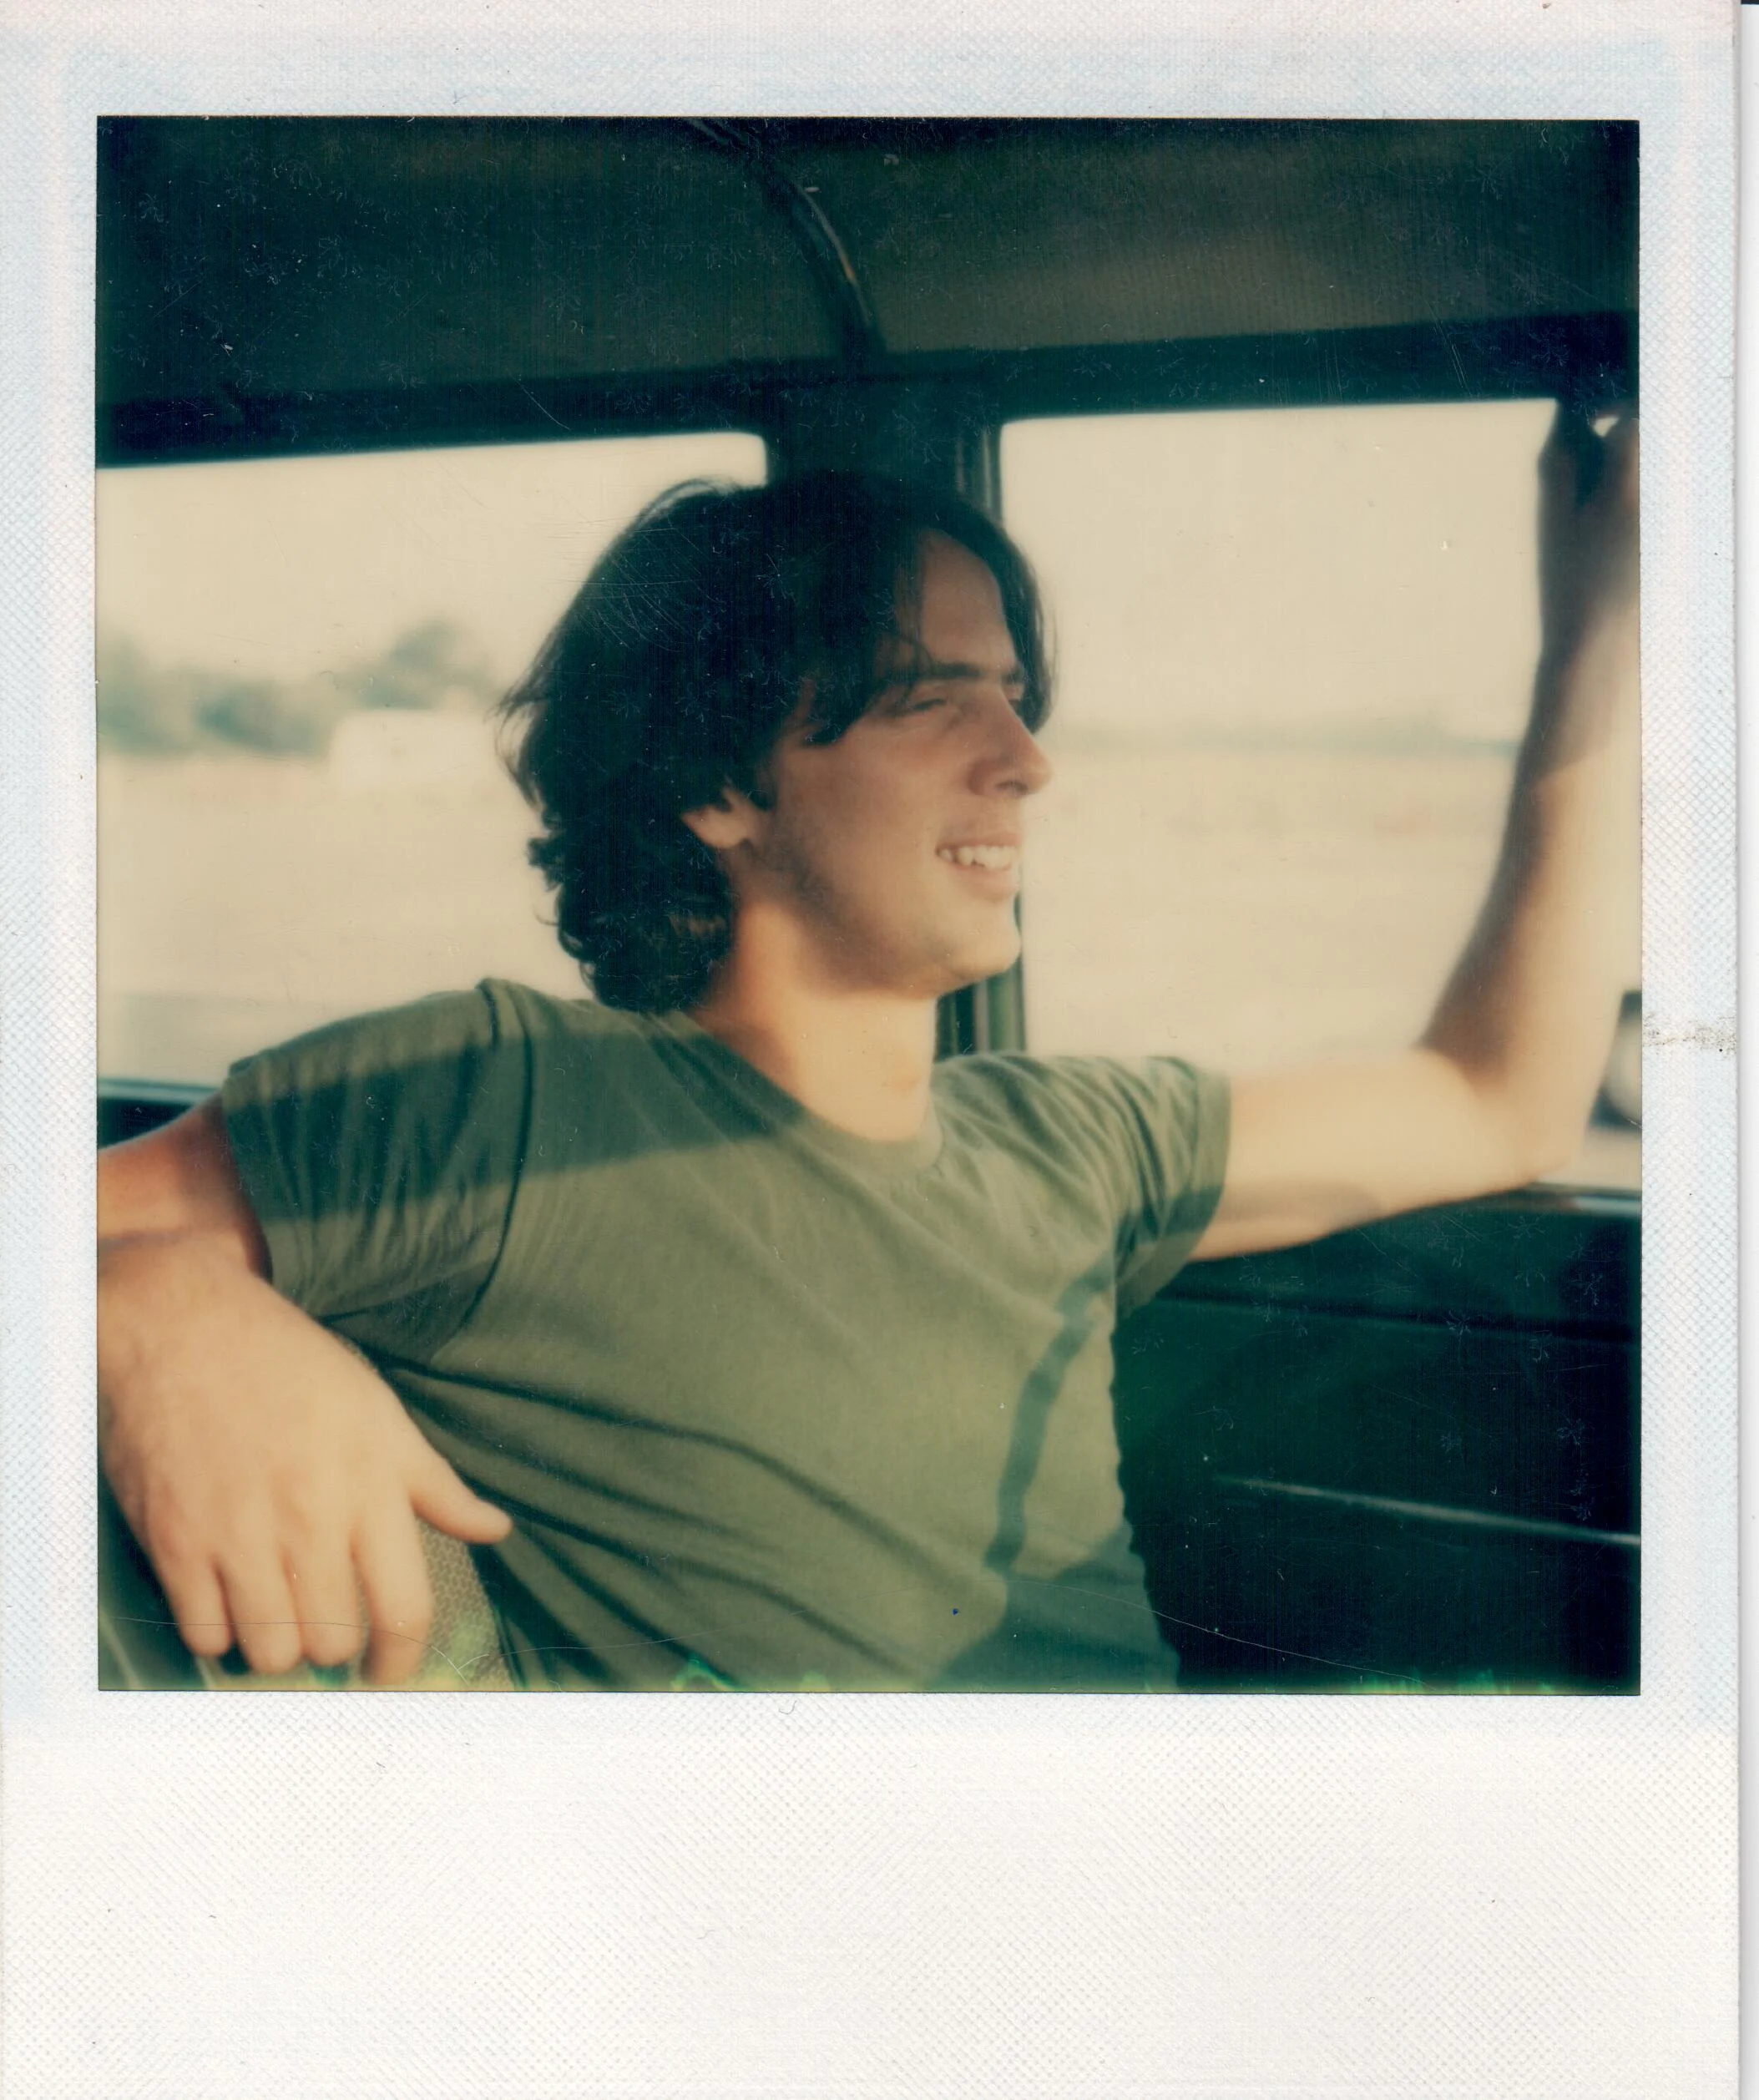 Photo of Michael. (color Polaroid, 10.8 x 8.9 cm) — $4,000